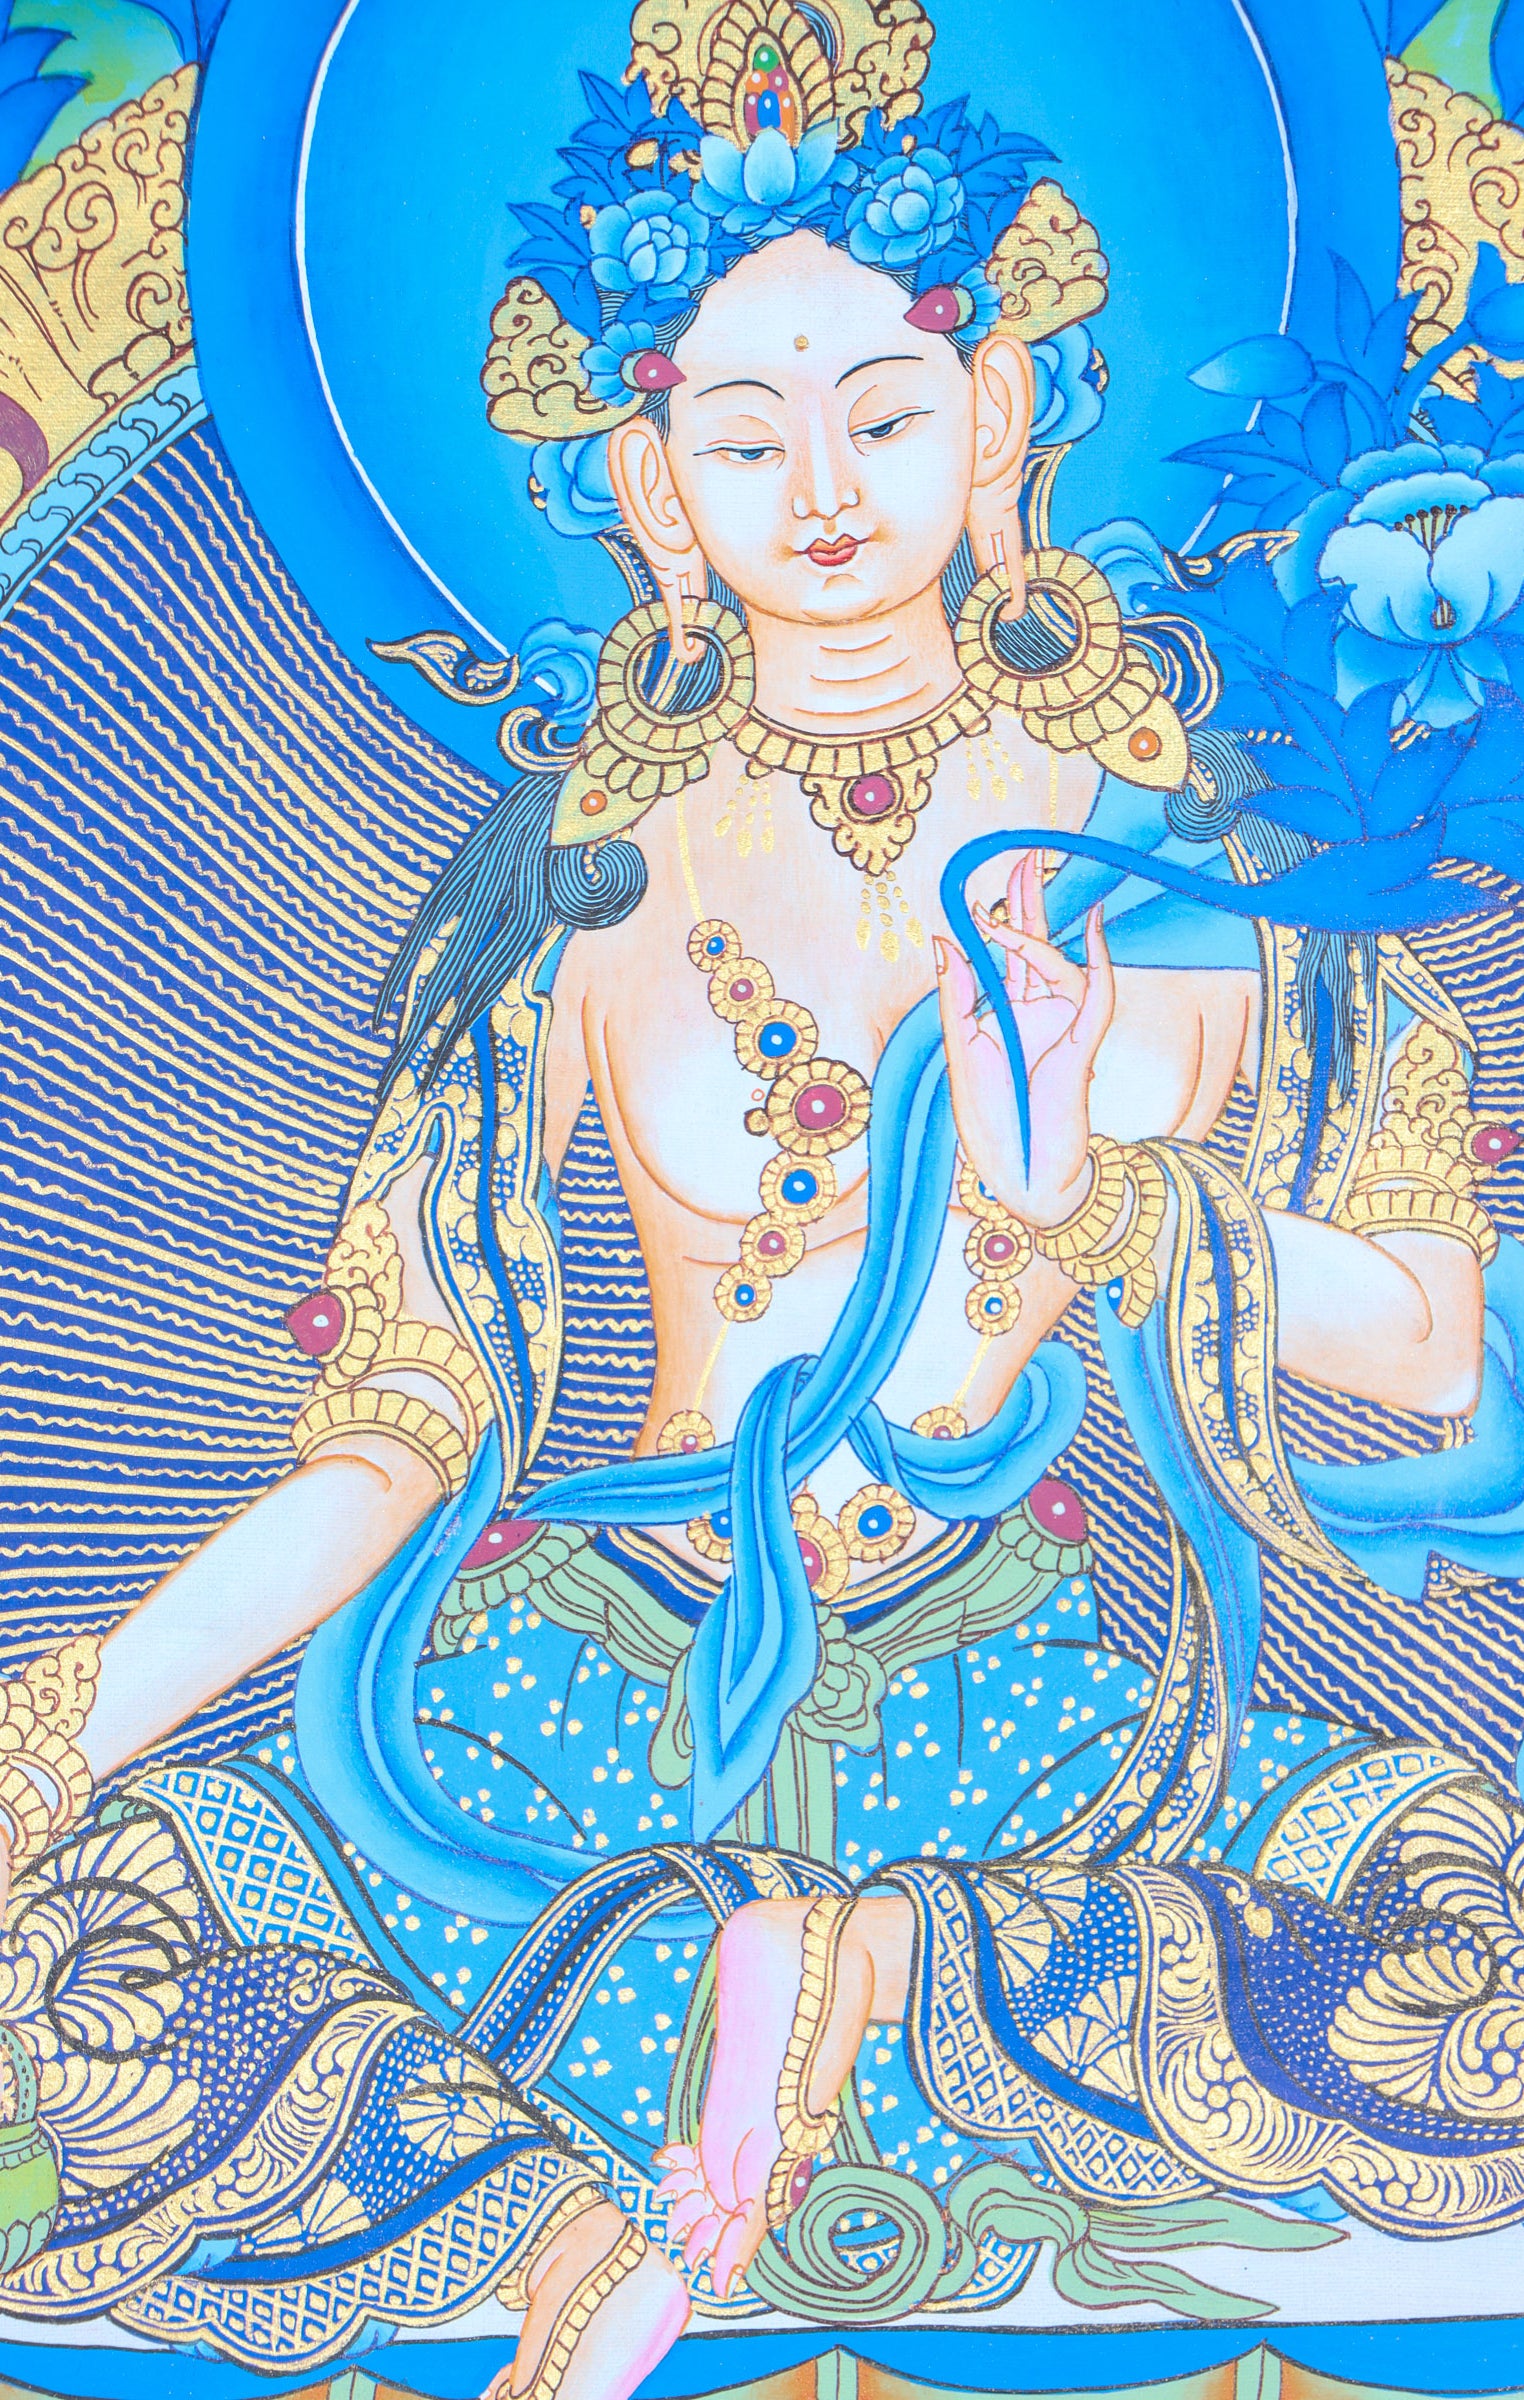 White Tara Thangka Painting for prayer and devotion.